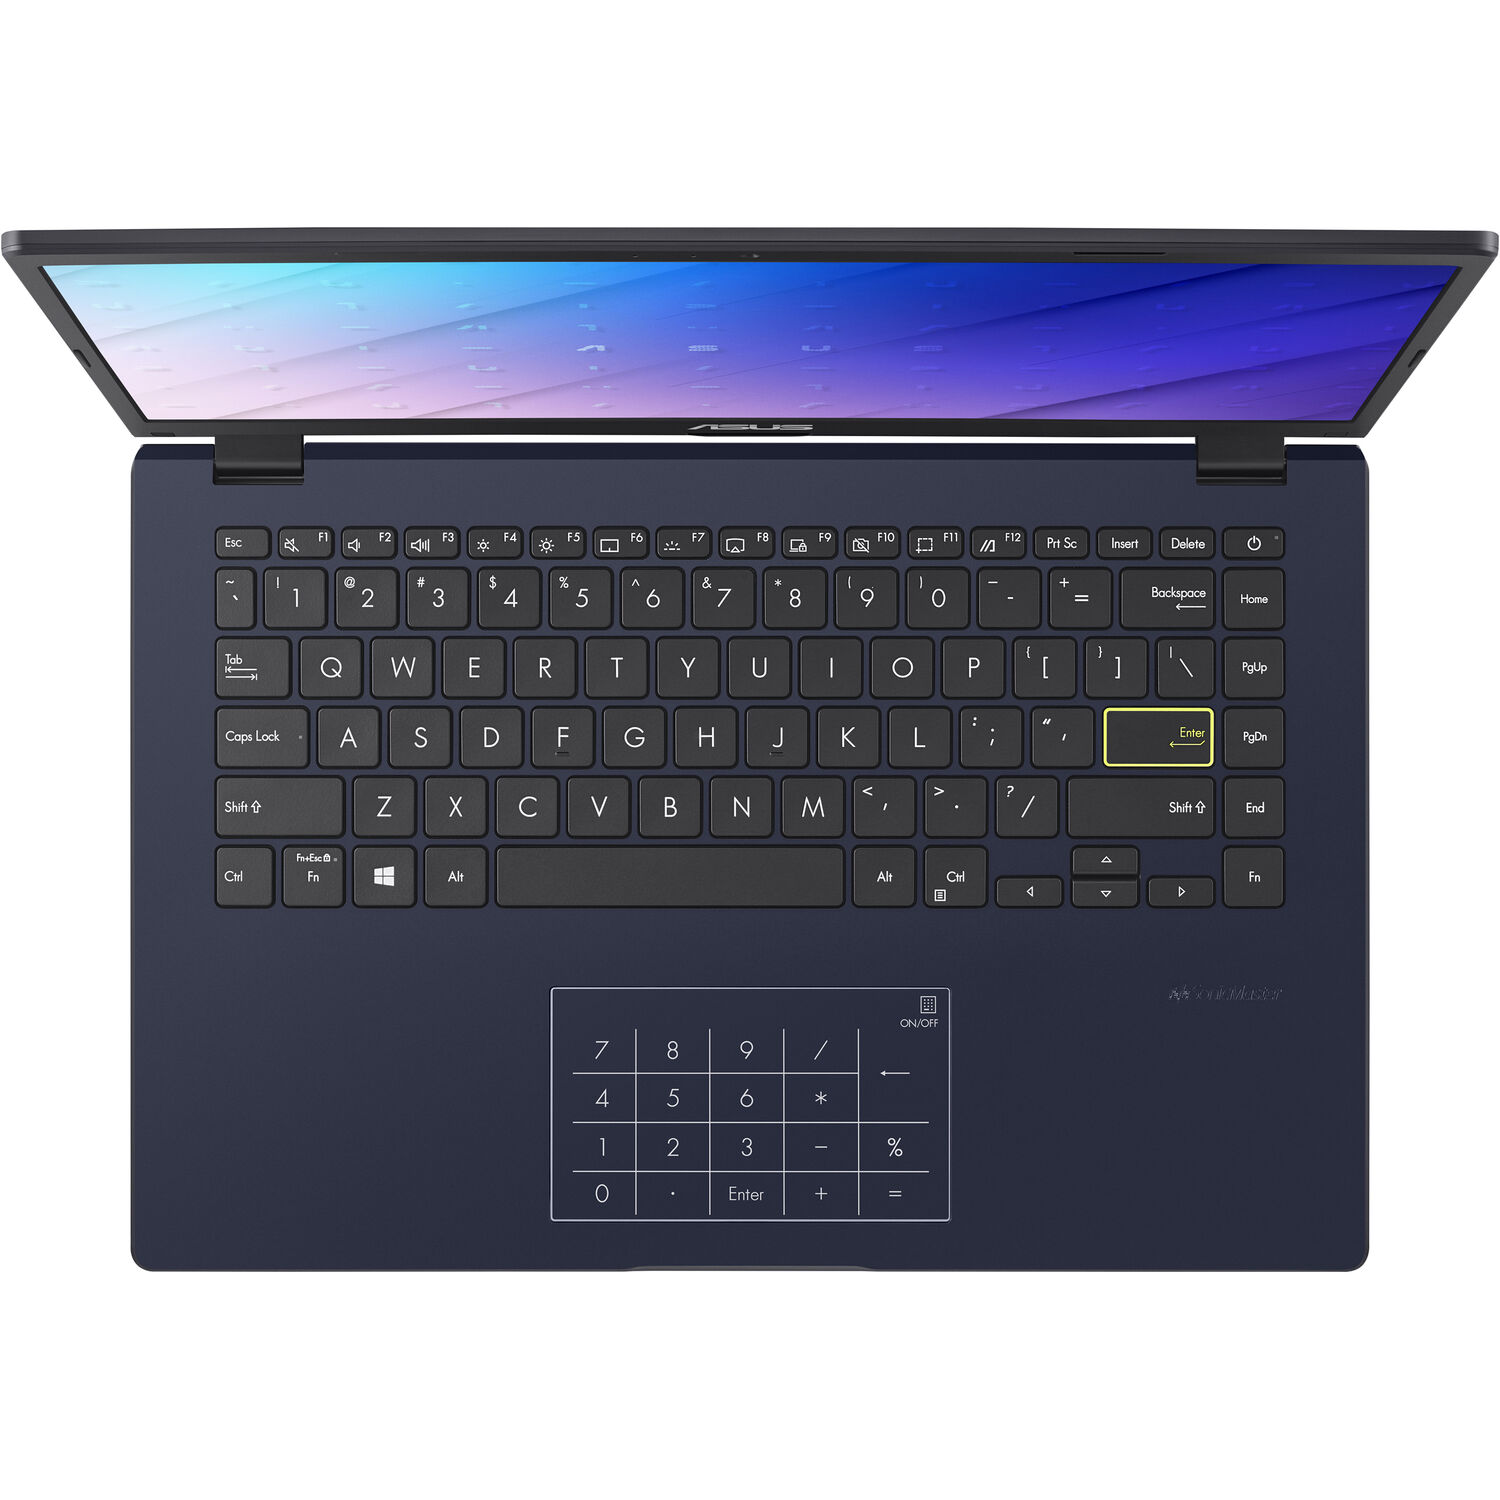 ASUS 14 L410 Everyday Value Laptop (Intel Celeron N4020 2-Core, 4GB RAM, 128GB PCIe SSD, 14.0" Full HD (1920x1080), Intel UHD 600, Wifi, Bluetooth, Webcam, 1xUSB 3.2, 1xHDMI, Win 10 Home) - image 3 of 6